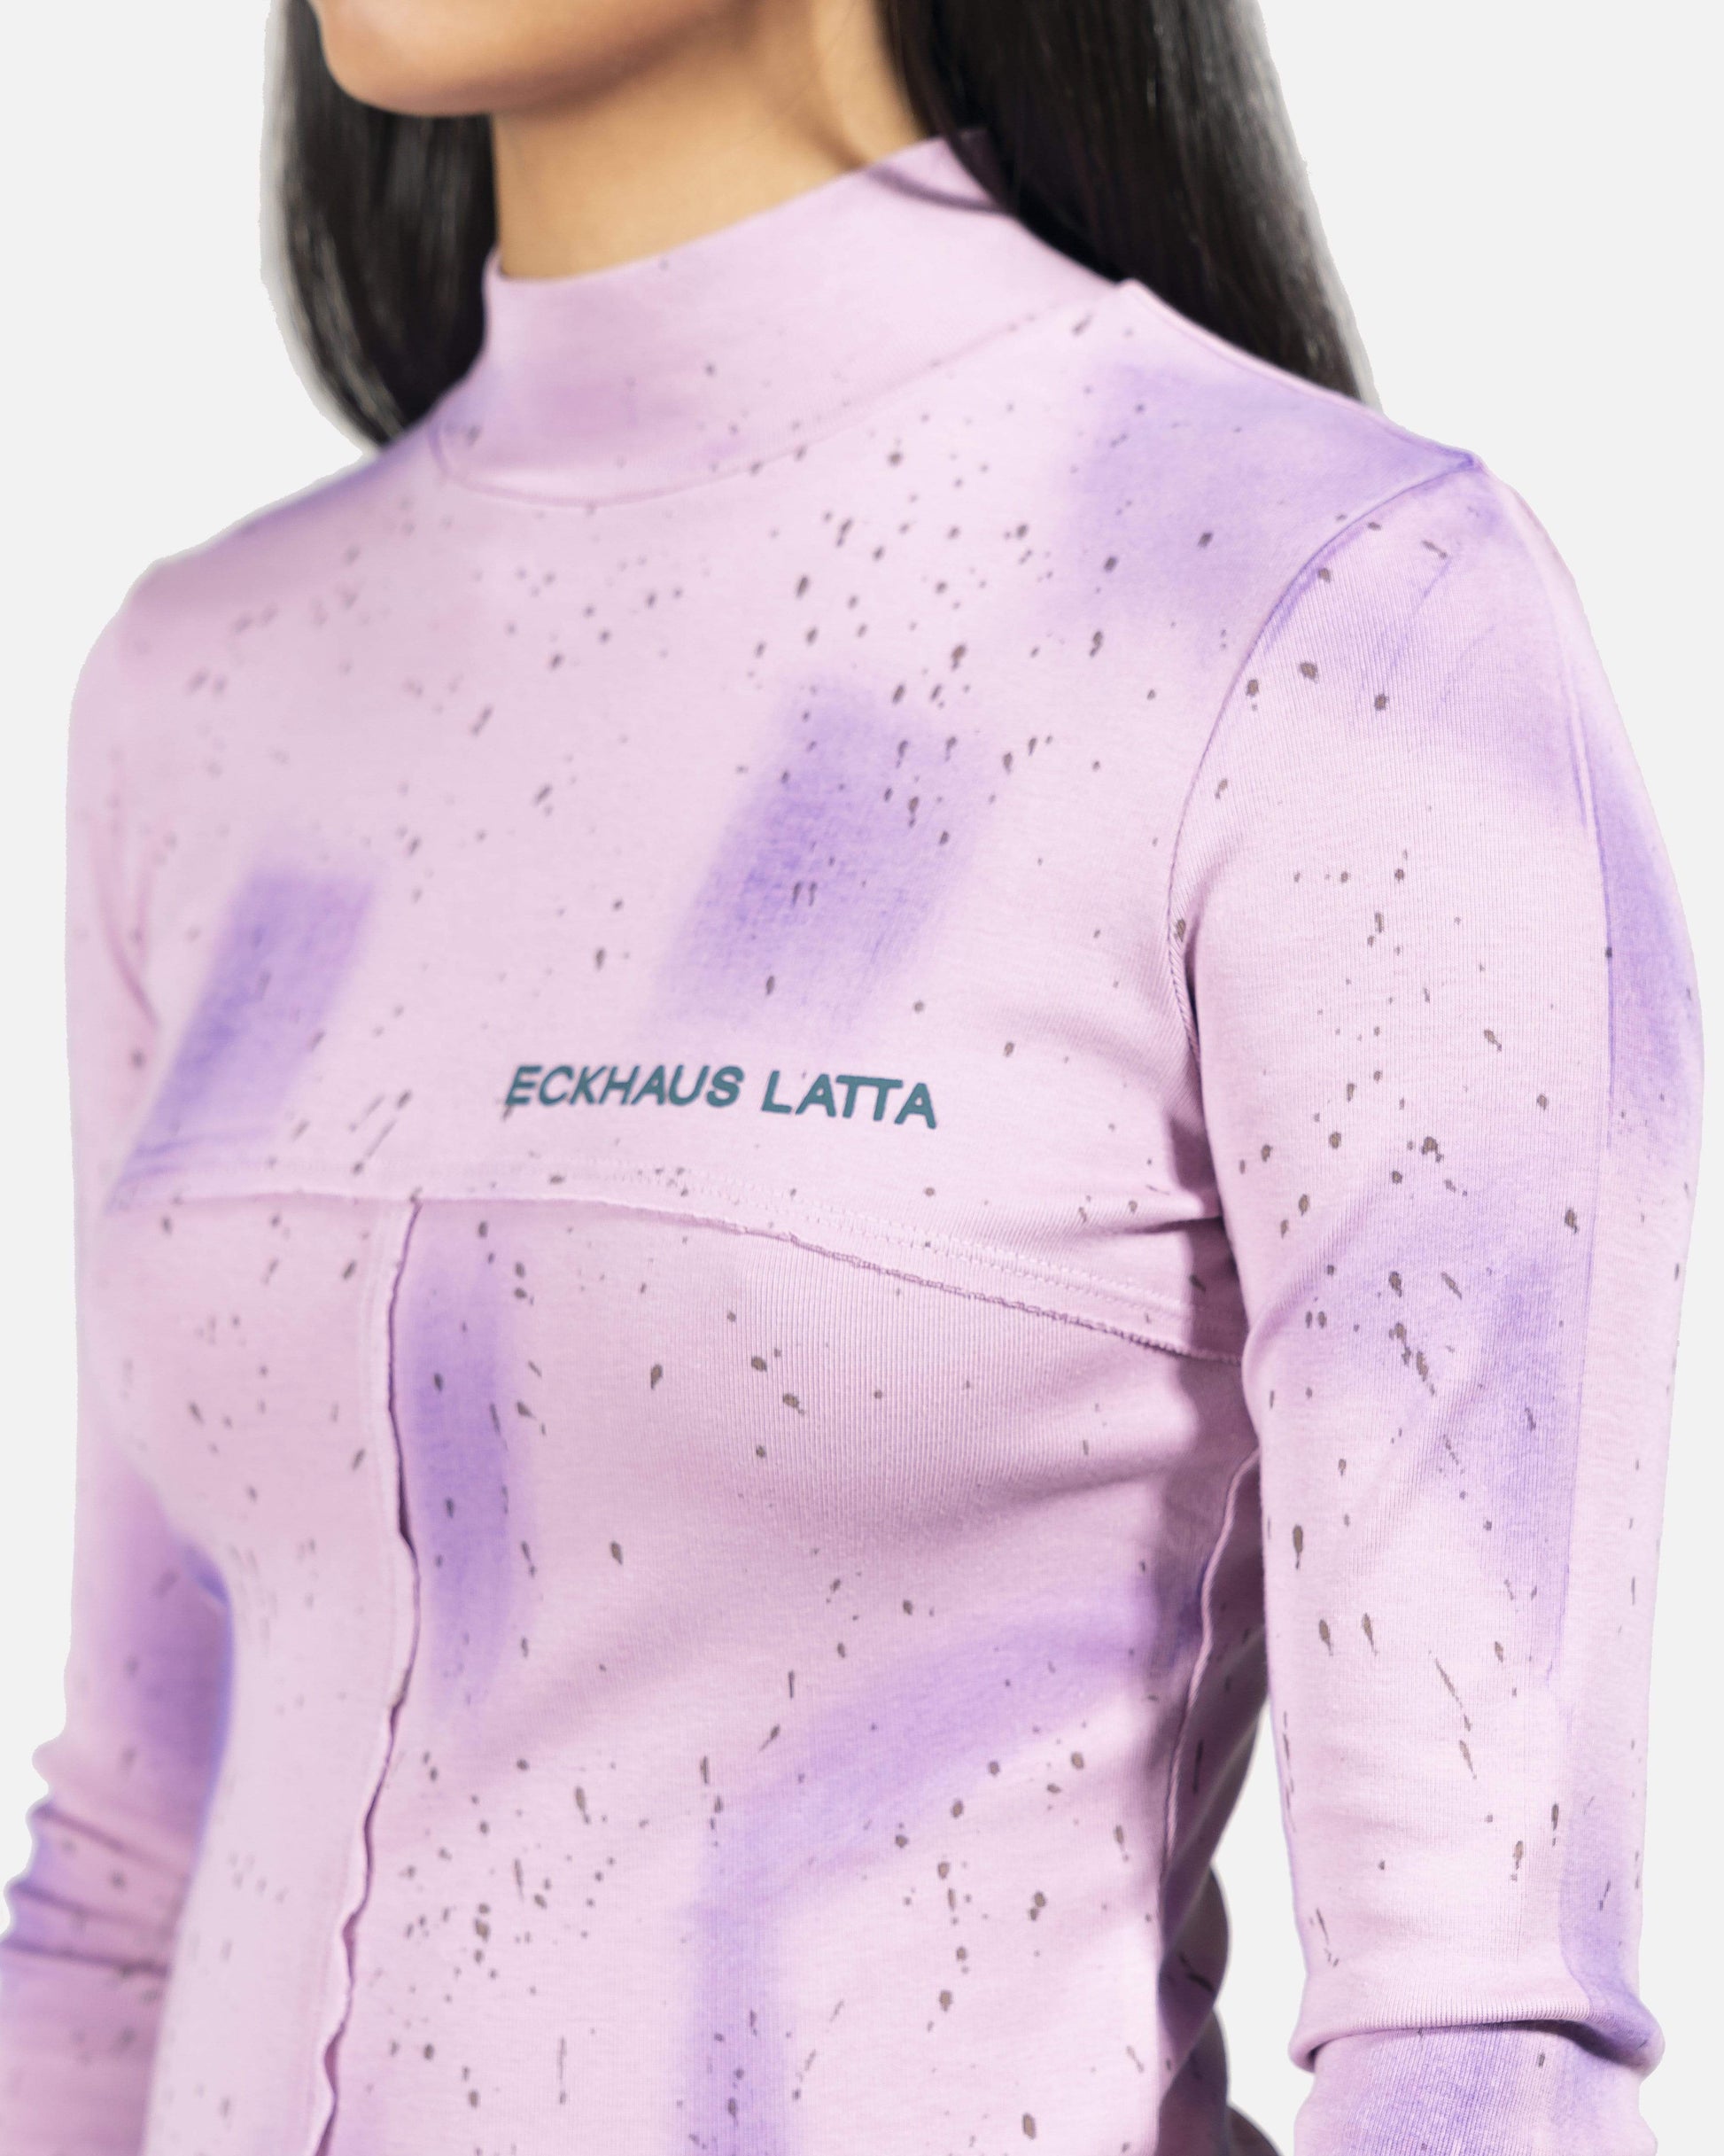 Eckhaus Latta Women Tops Lapped Baby Turtleneck in Galaxy Lilac